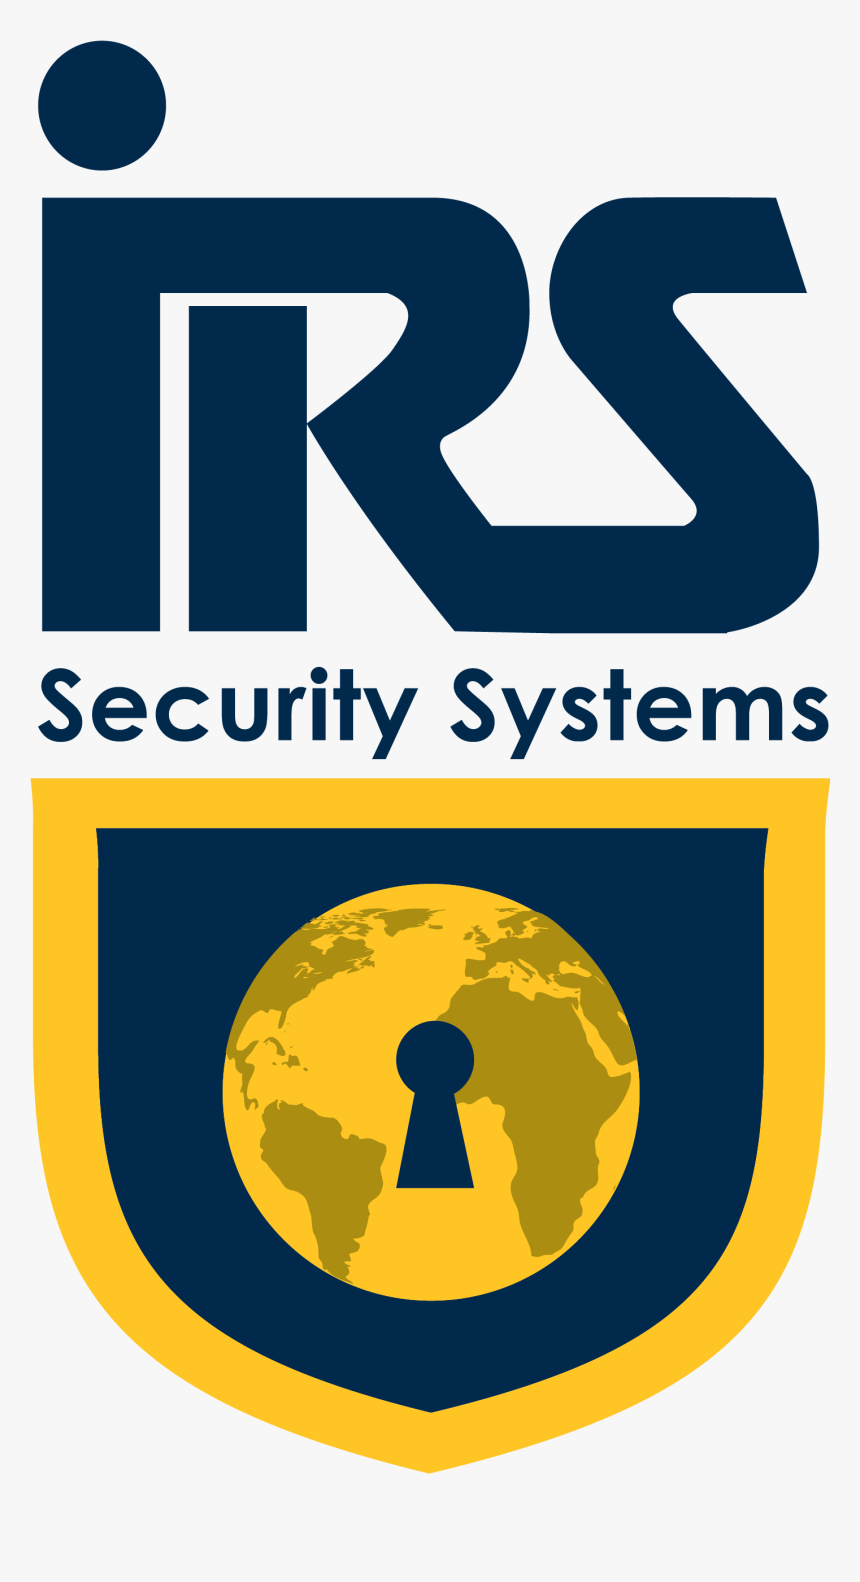 Irs Logo Png - Circle, Transparent Png, Free Download